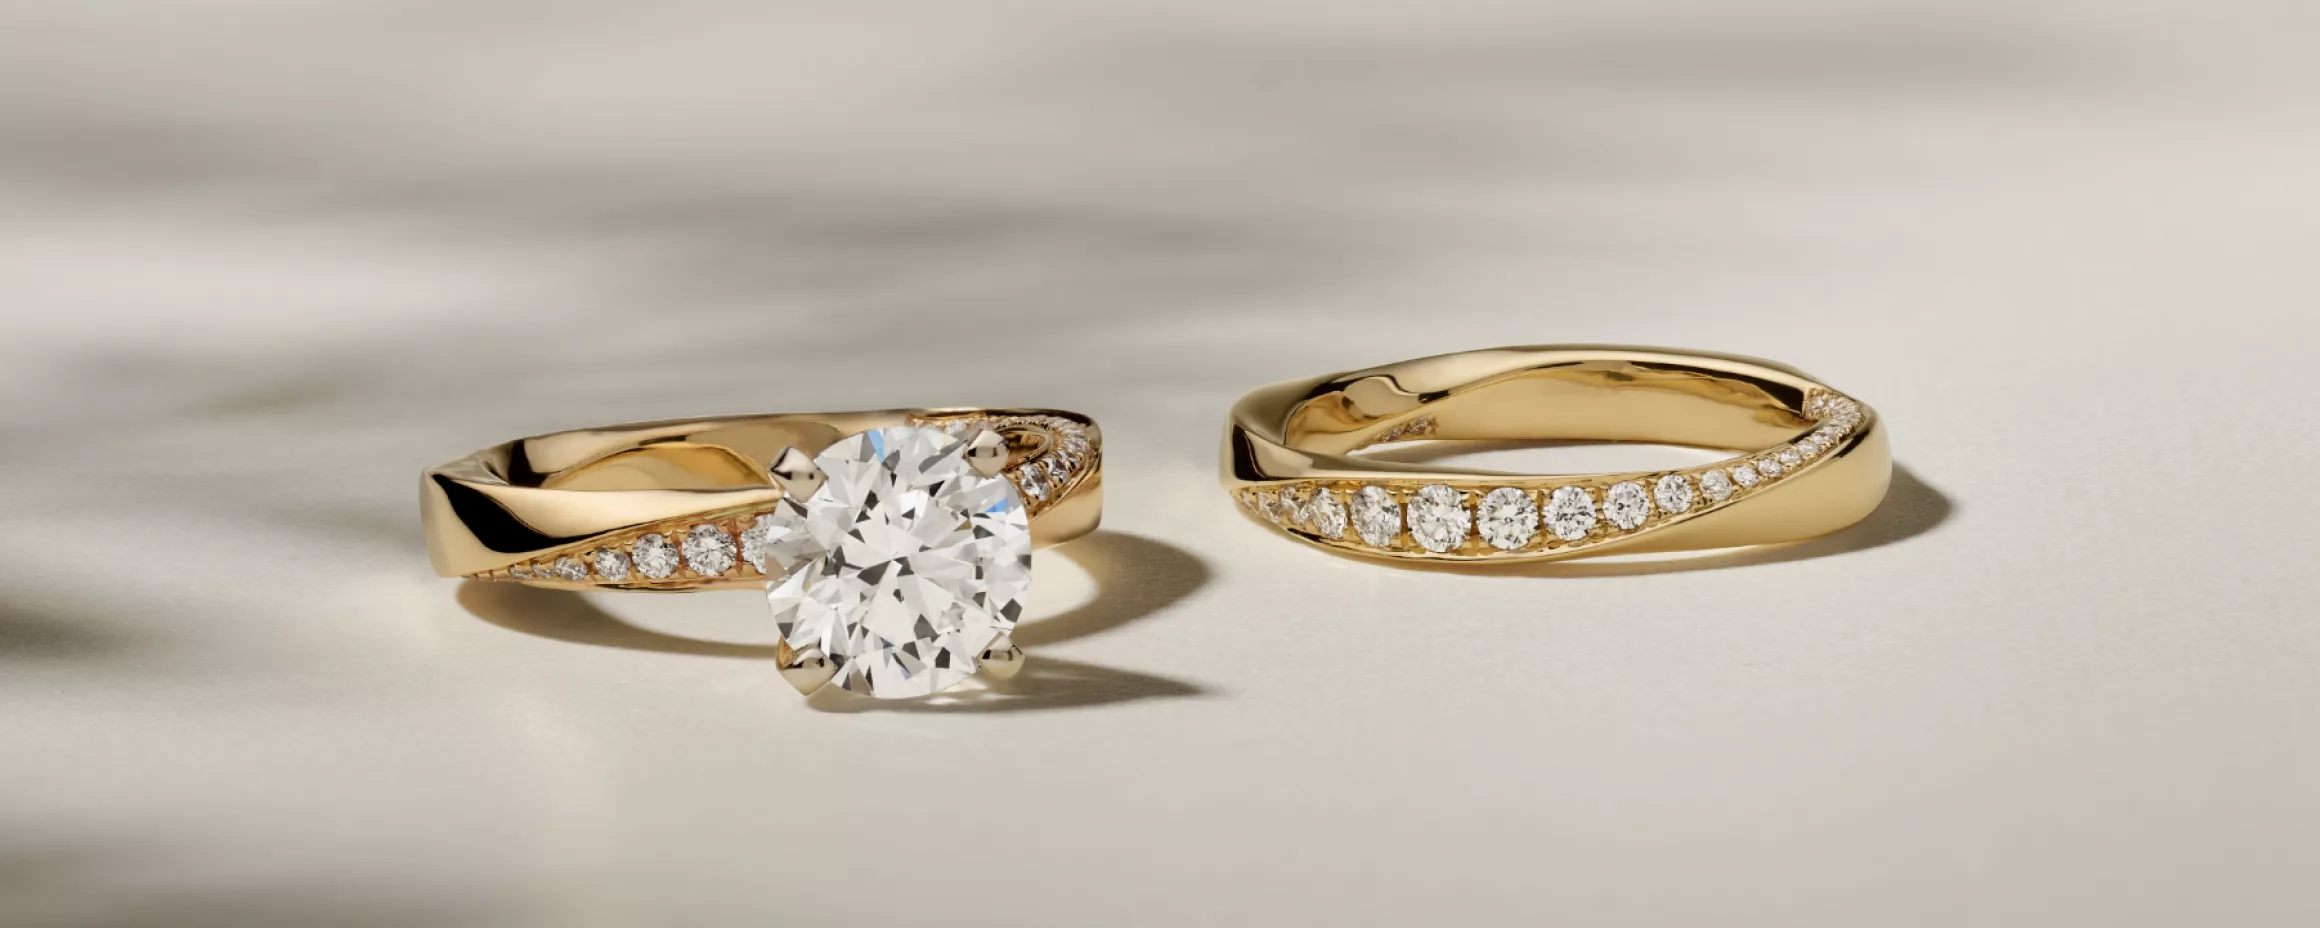 Matching wedding ring set featuring around diamond center stone in yellow gold. Twisting diamond pattern on an engagement ring and matching wedding band set